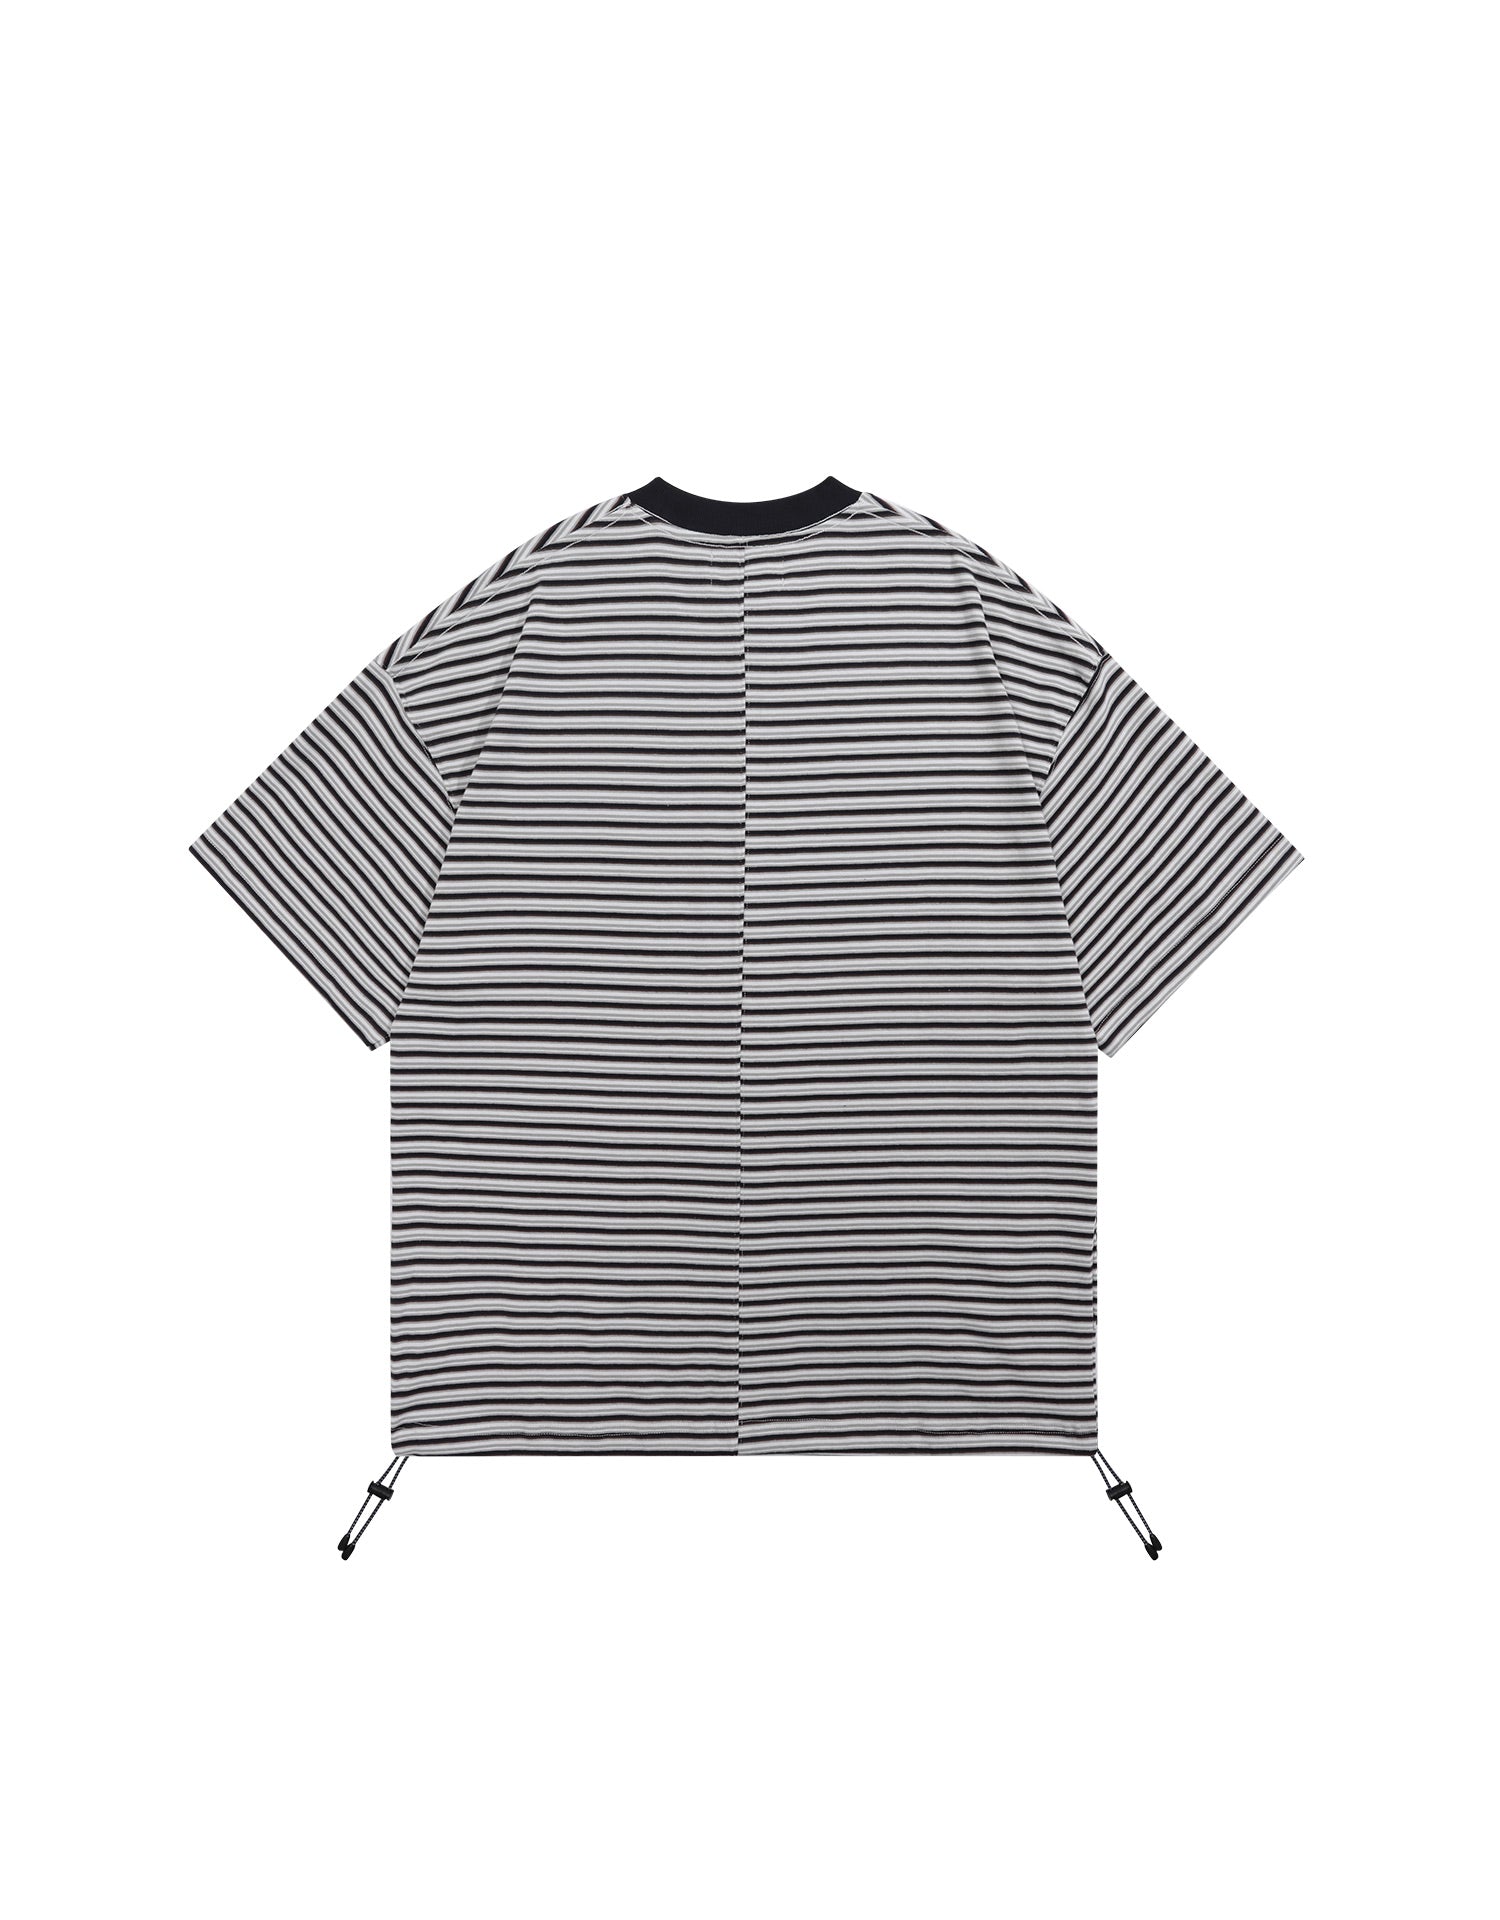 TopBasics Stripe Patchwork T-Shirt